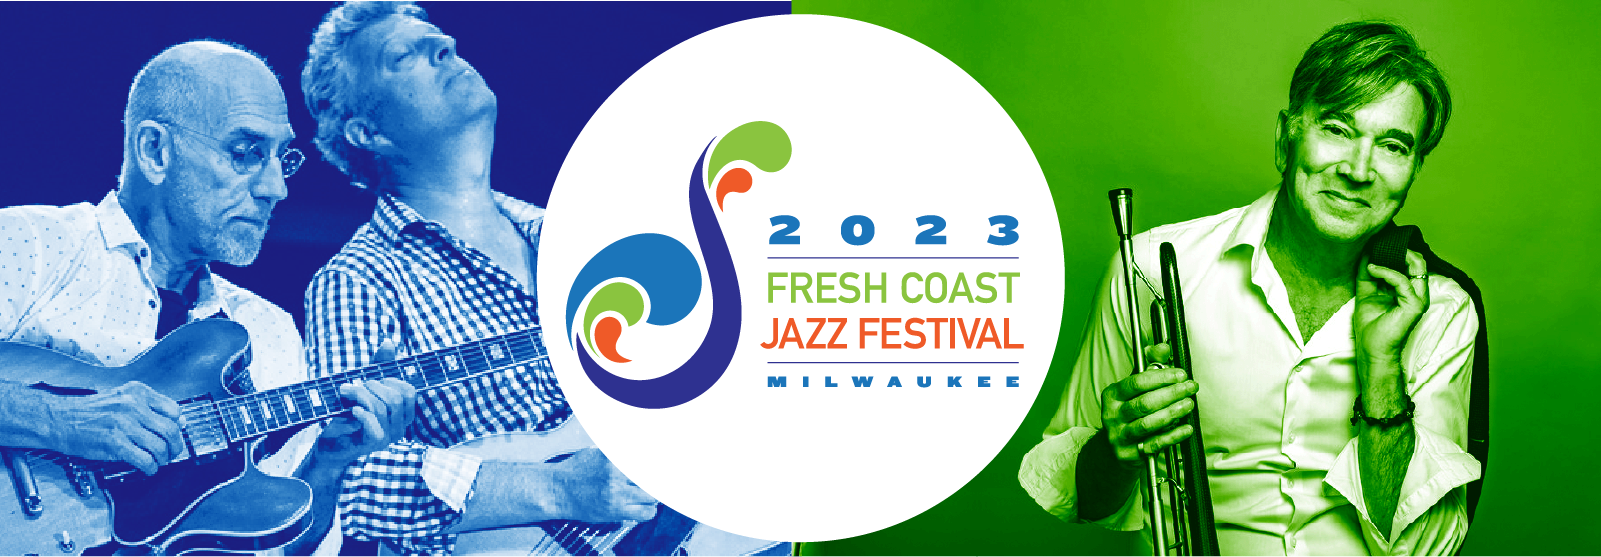 Fresh Coast Jazz Festival